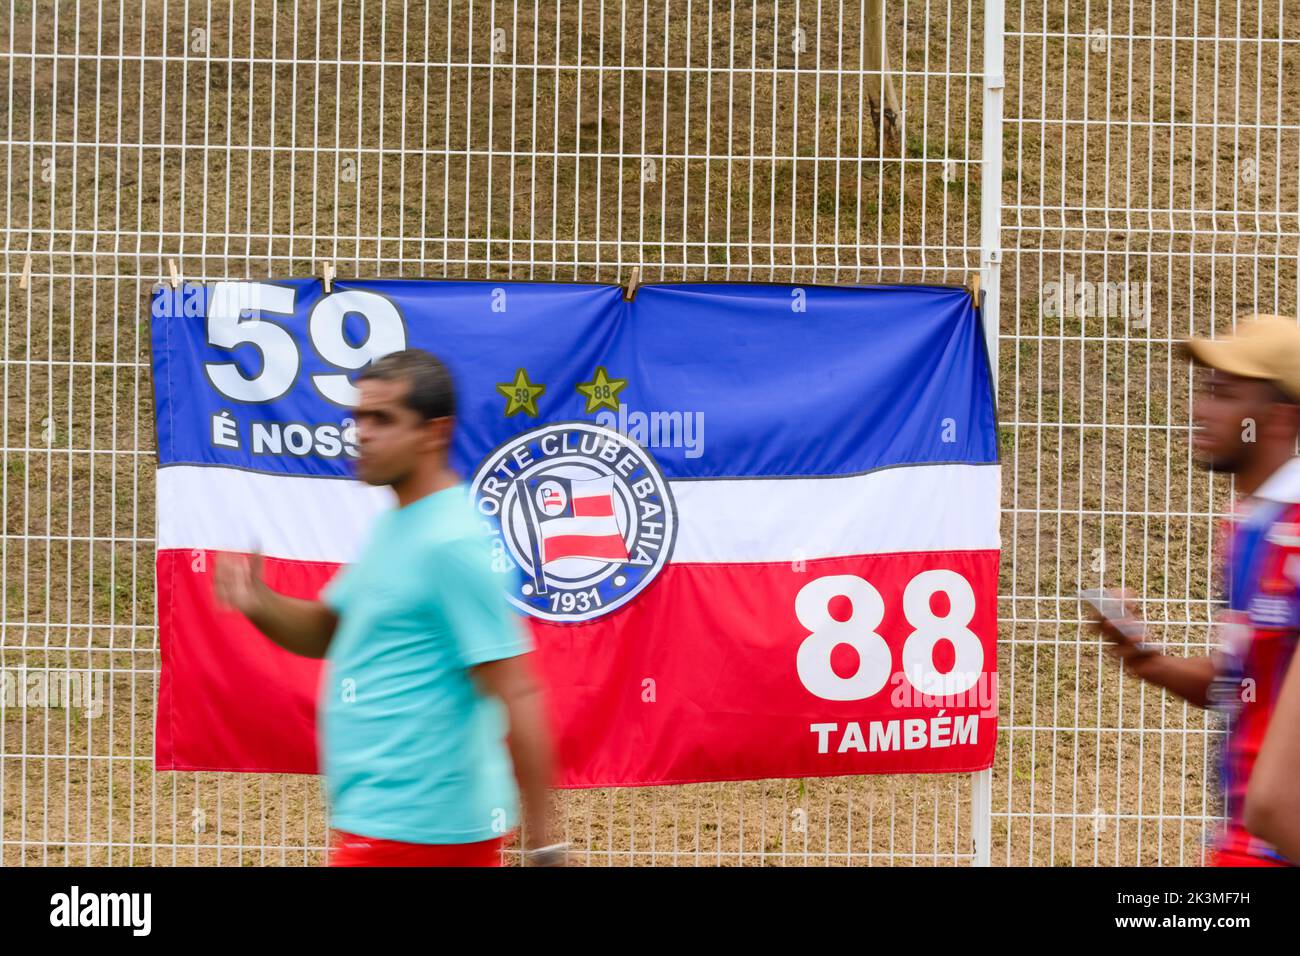 Salvador, Bahia, Brazil - April 01, 2018: Supporters with shirts and flags of Esporte Clube Bahia football team at Fonte Nova Arena. Salvador, Bahia. Stock Photo